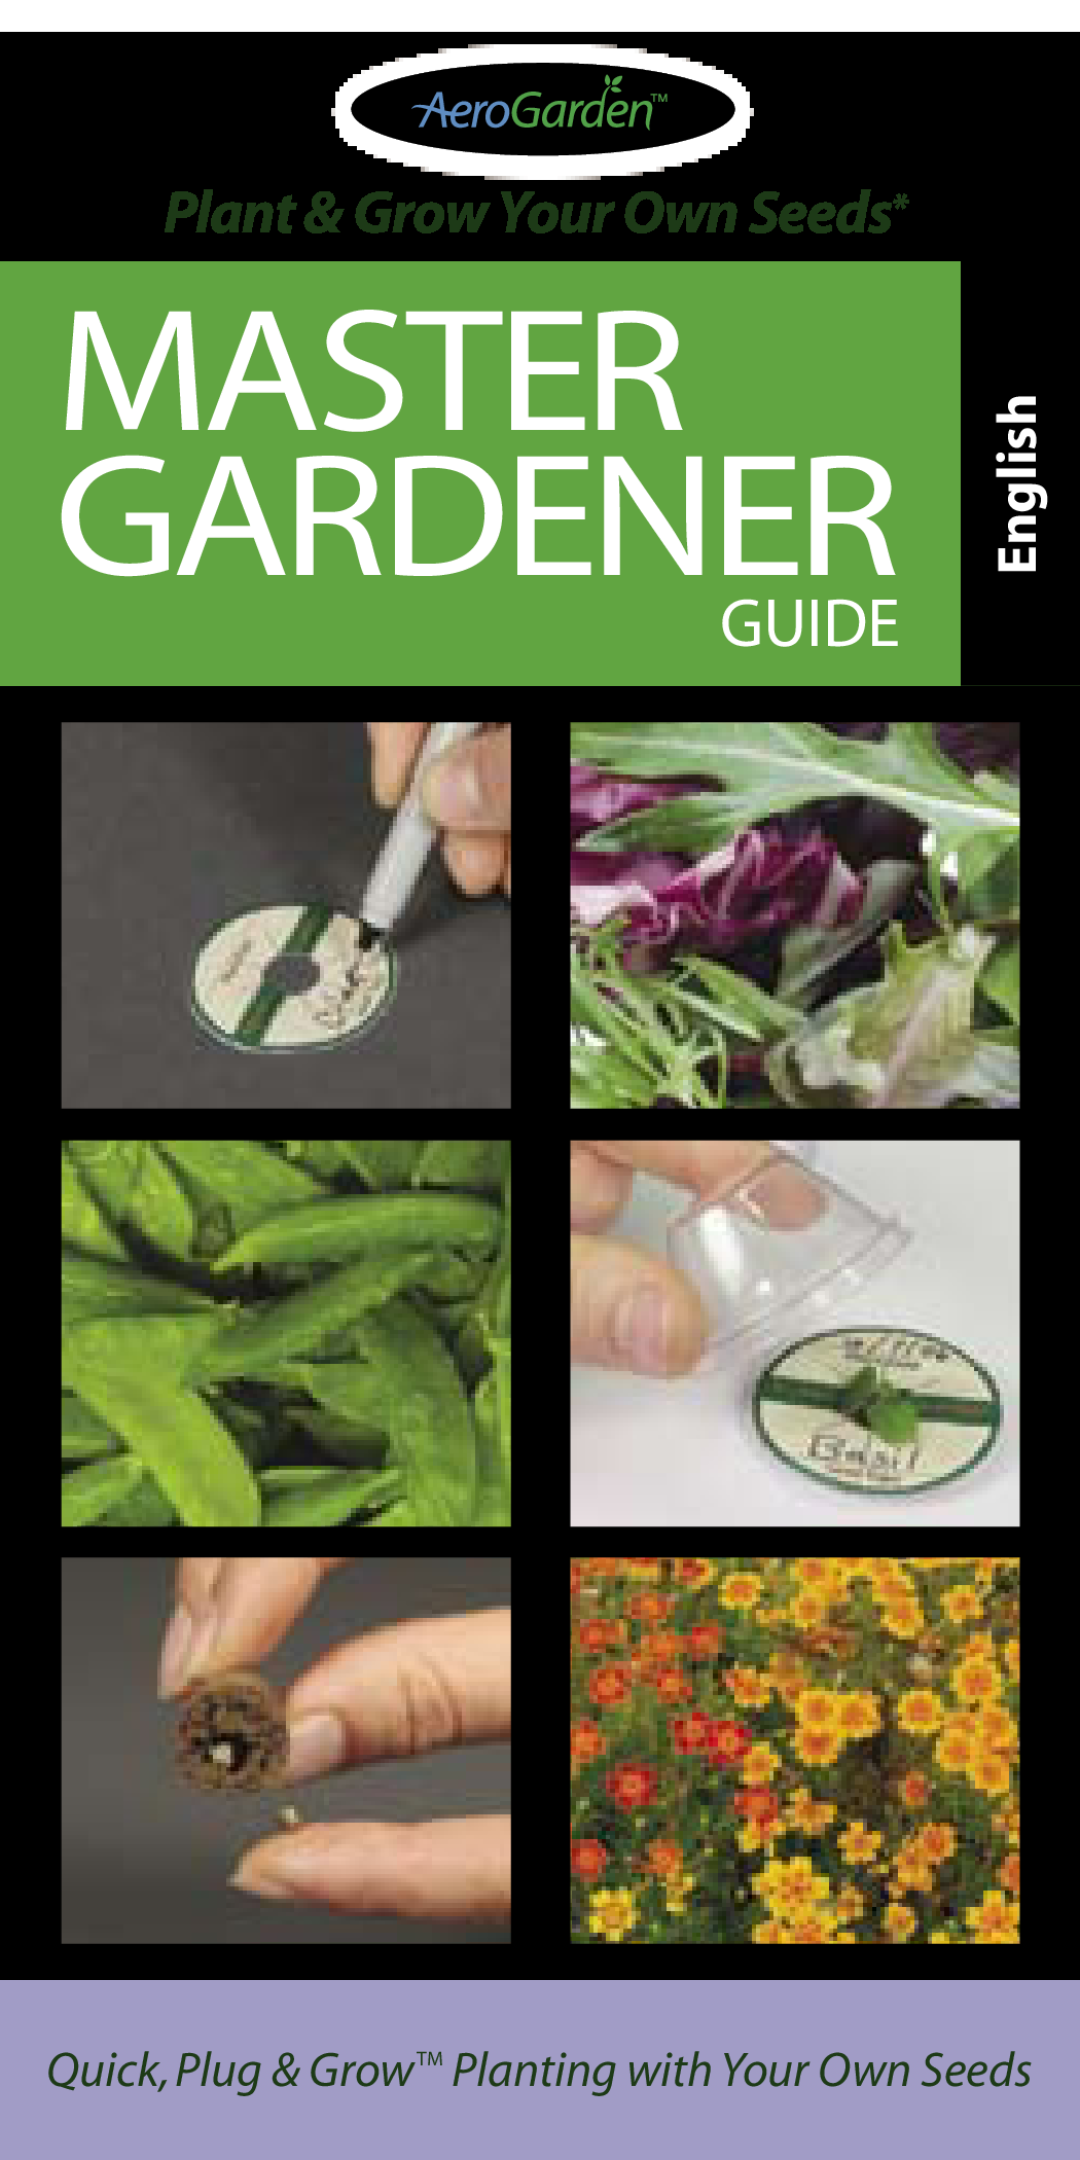 AeroGarden 1-Season, 7-Pod manual Master Gardener, Guide, Plant & Grow Your Own Seeds, English, Seeds not included 